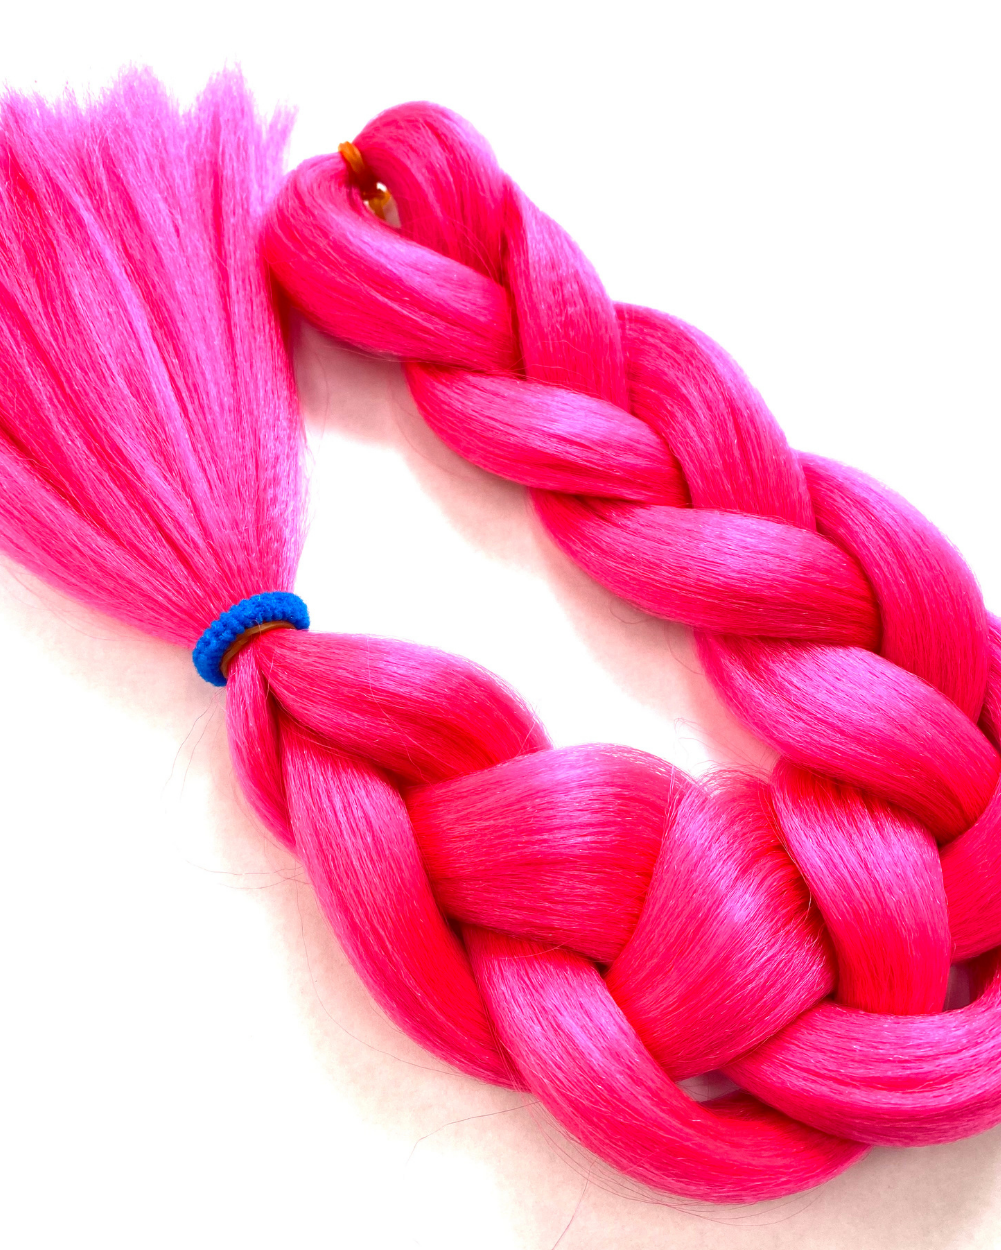 Flamingo - Neon Pink Hair Extension - Lunautics Braid-In Hair